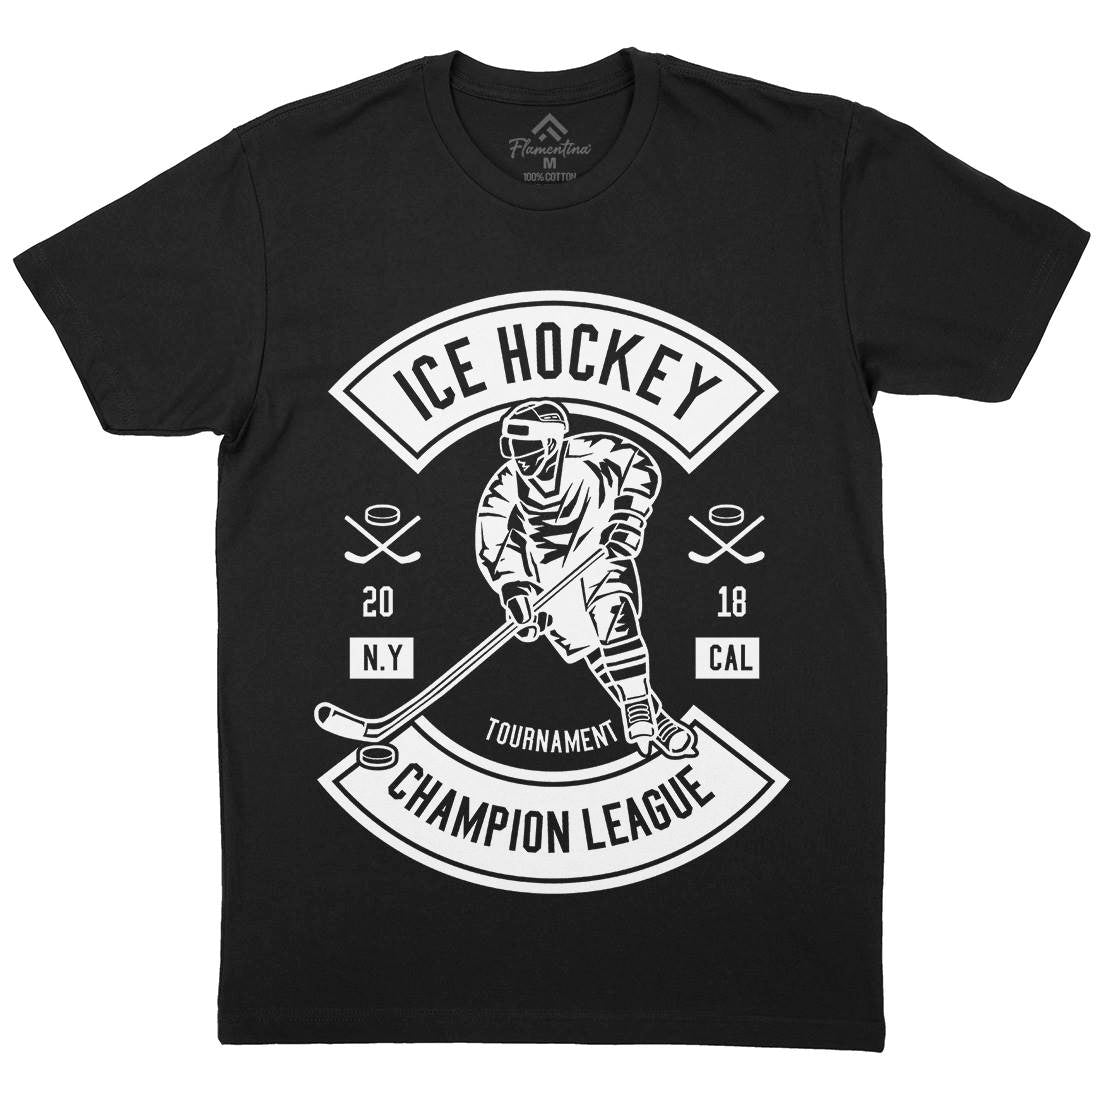 Ice Hockey Champion League Mens Crew Neck T-Shirt Sport B564